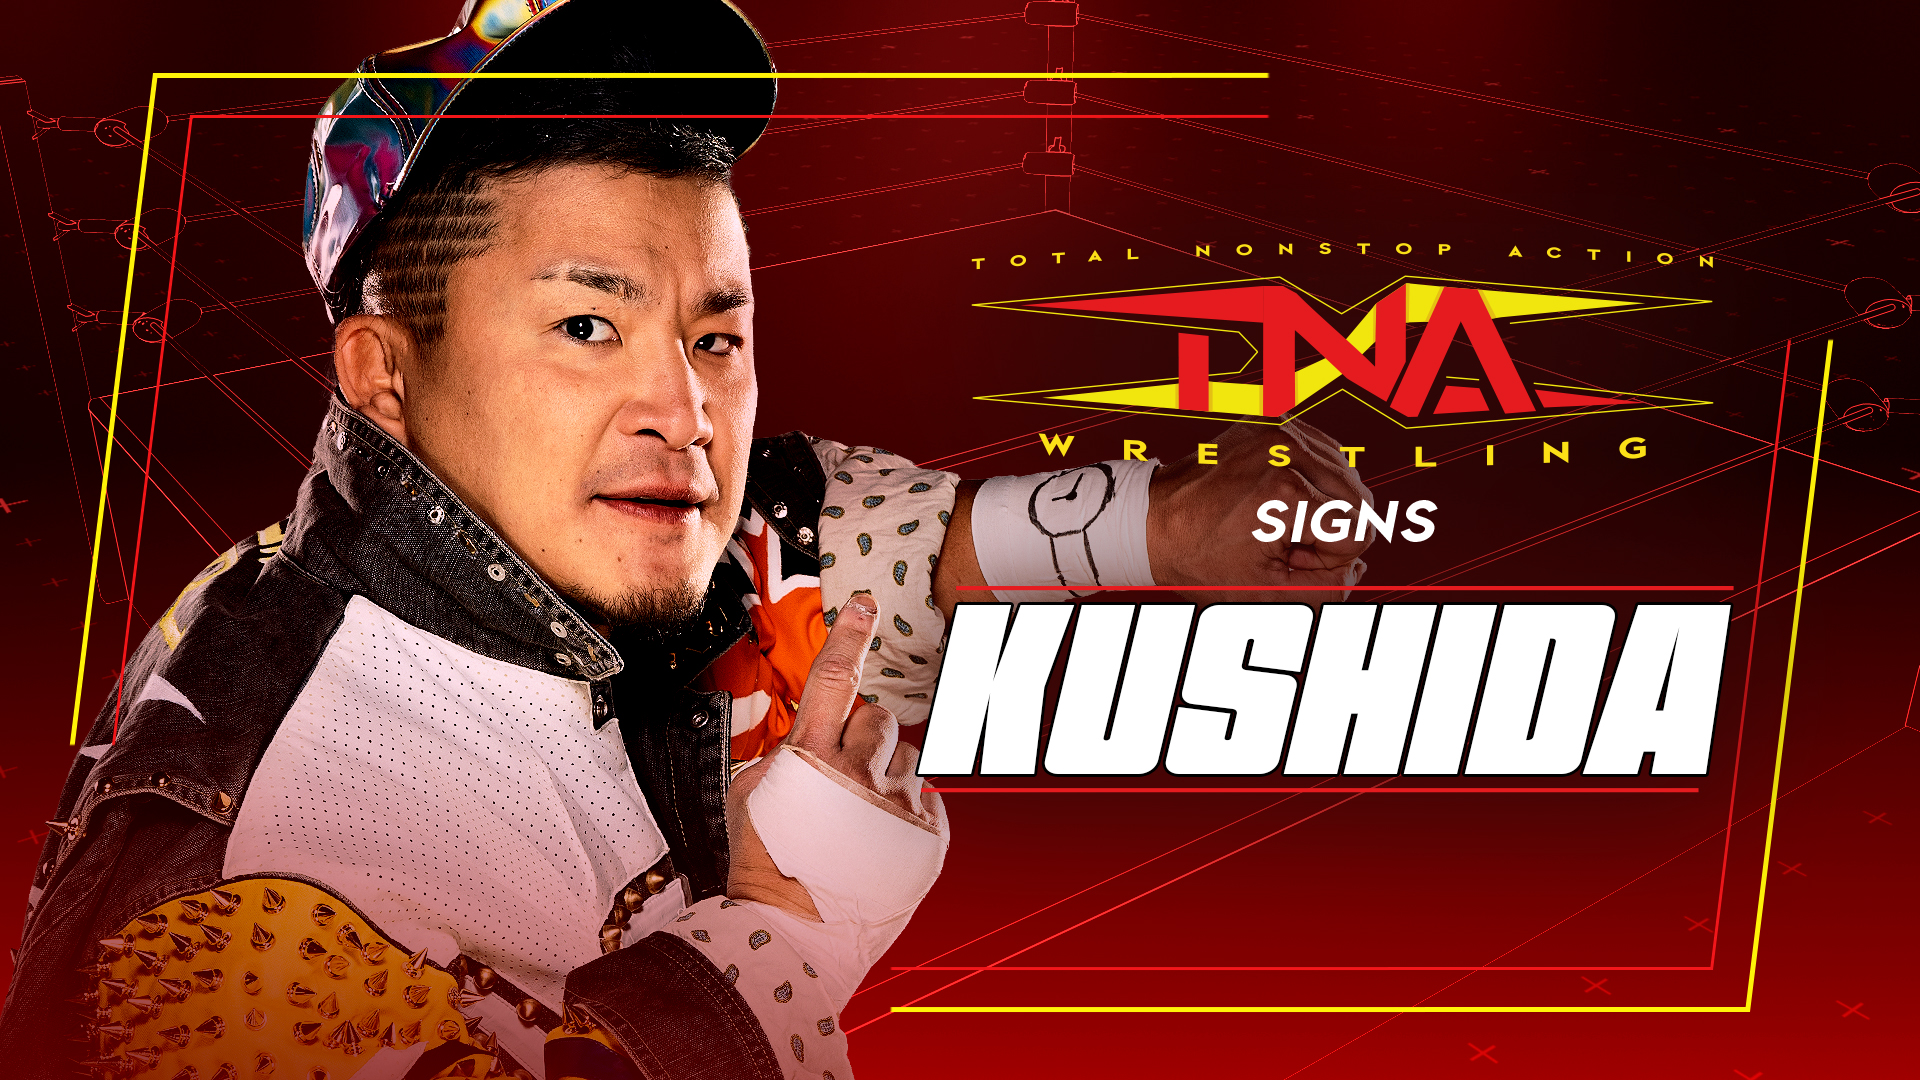 Officiel : Kushida signe à la TNA.